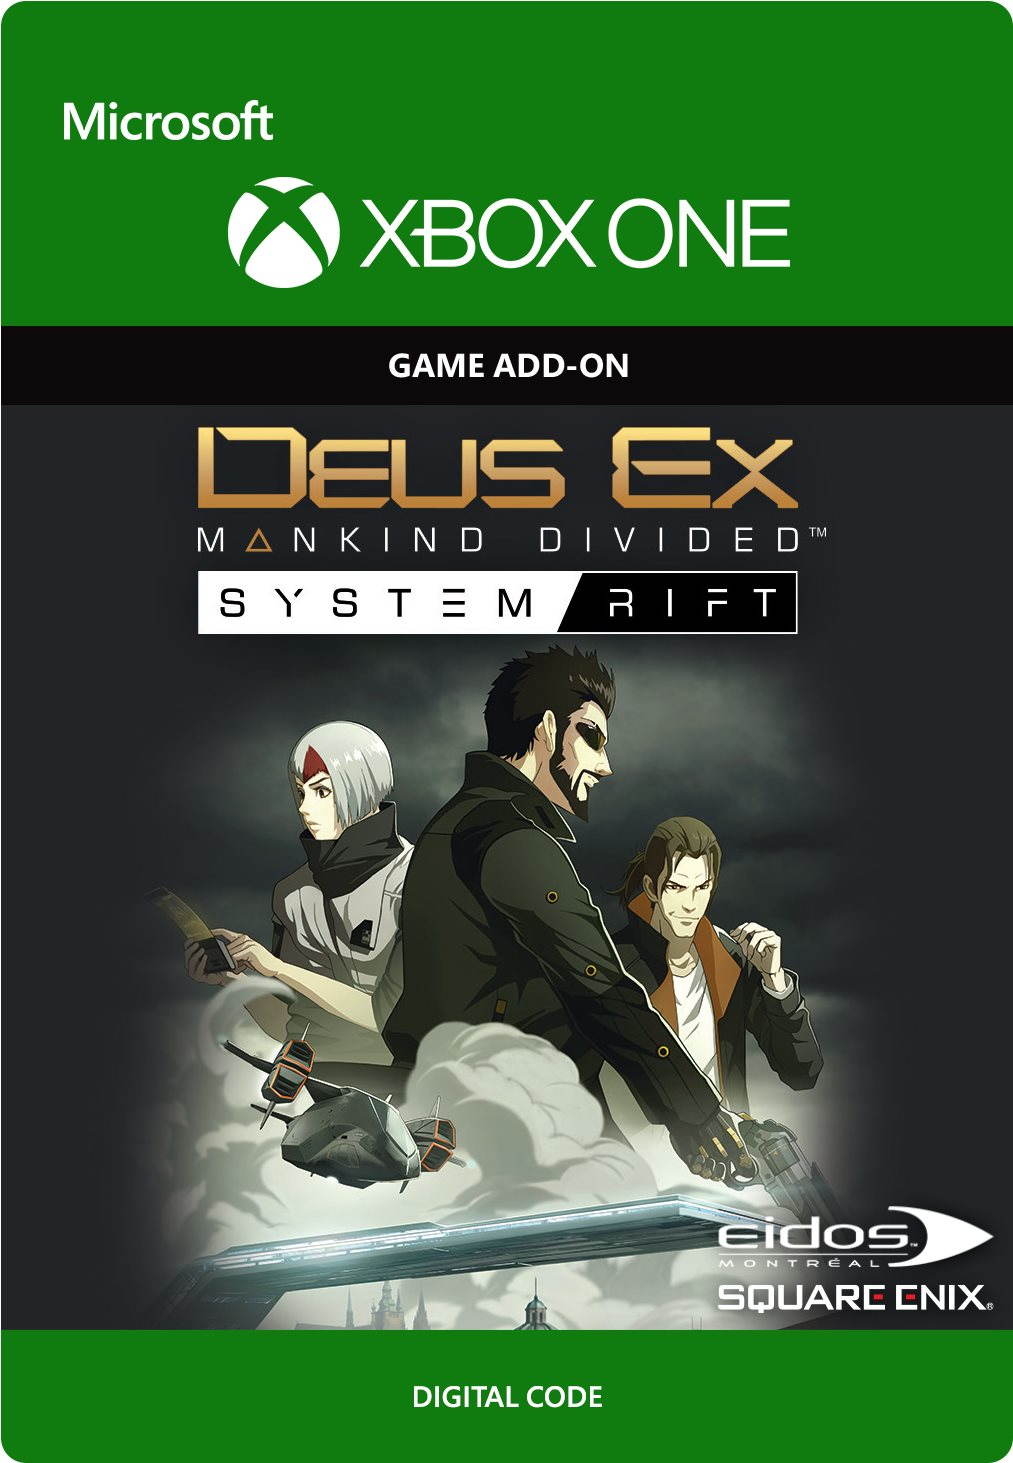 Deus Ex Mankind Divided: System Rift - Xbox Digital